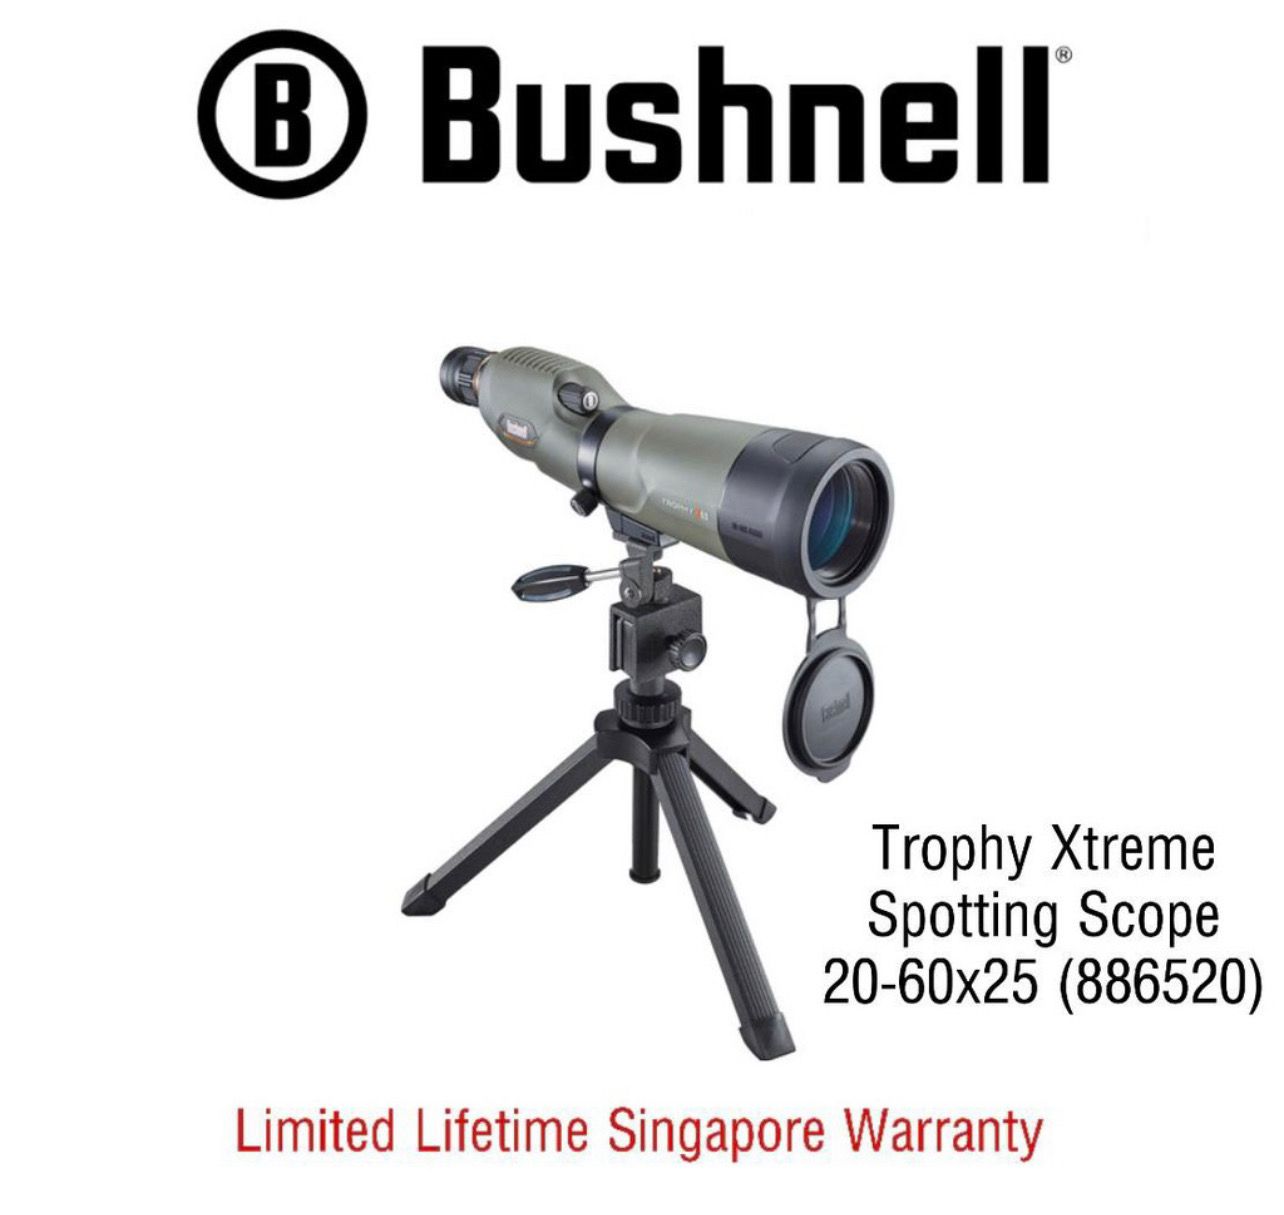 Bushnell Spotting Scope Trophy Xtreme 20-60x65 (886520) - Limited Lifetime Warranty